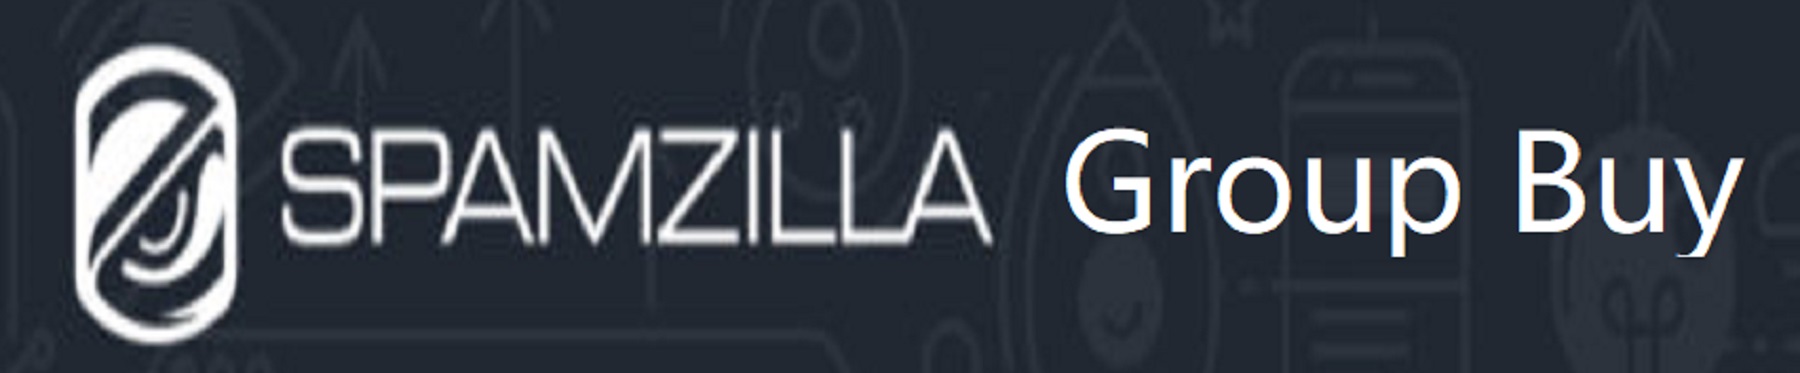 SpamZilla Group Buy Tool